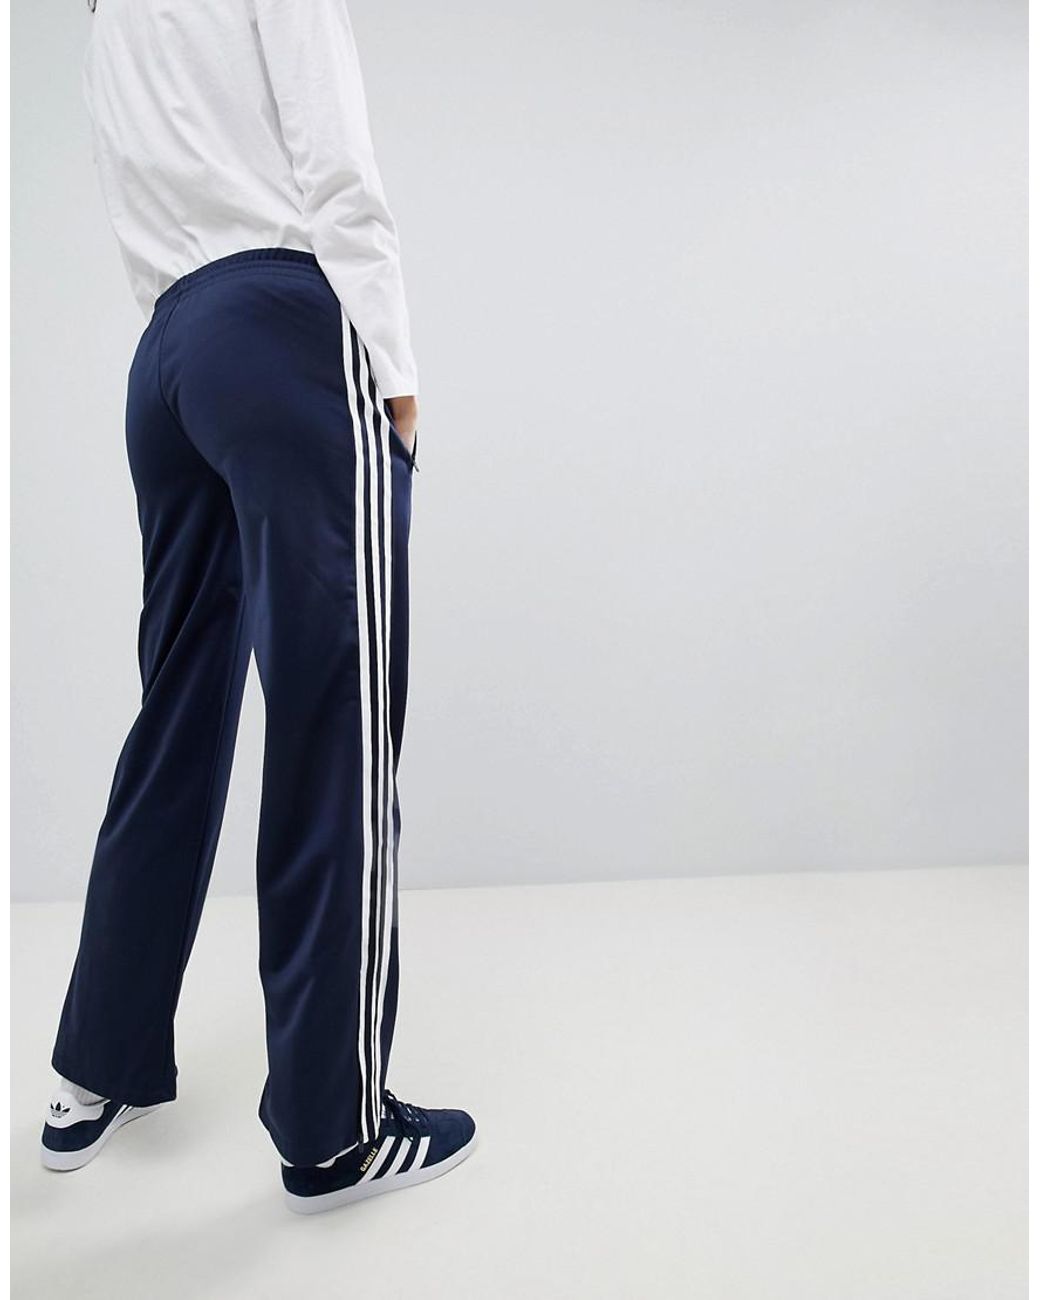 adidas Originals Originals Adicolor Wide Sailor Pants In Navy in | Lyst